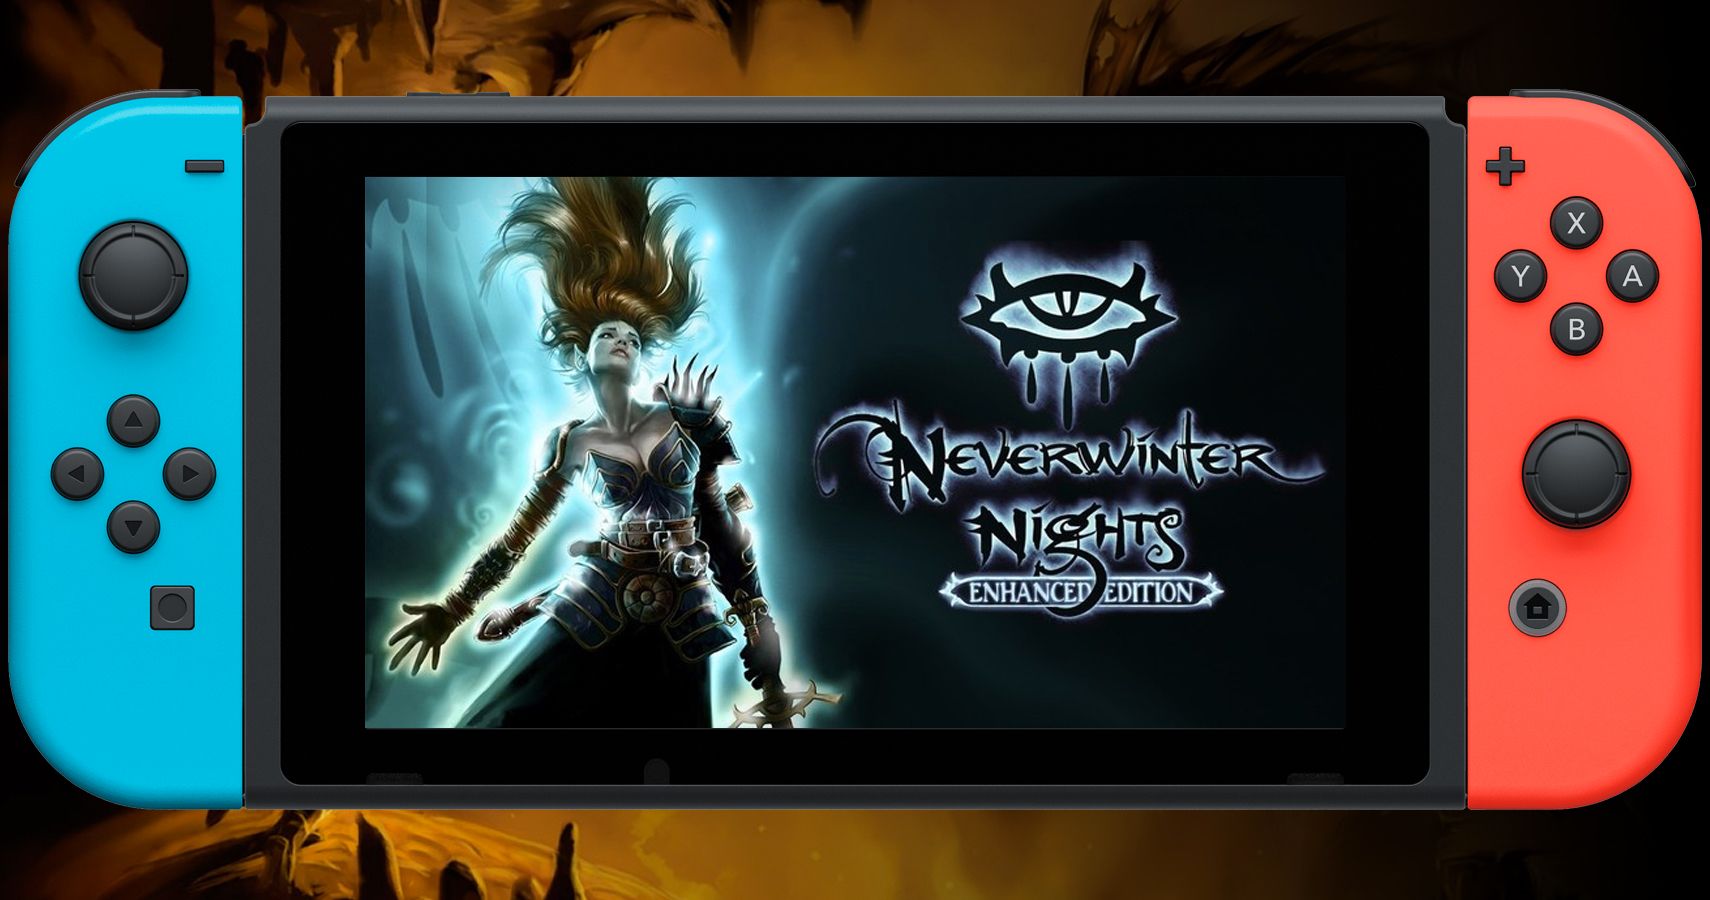 Consoles Enhanced Edition Onto Rolls Finally Nights: Neverwinter